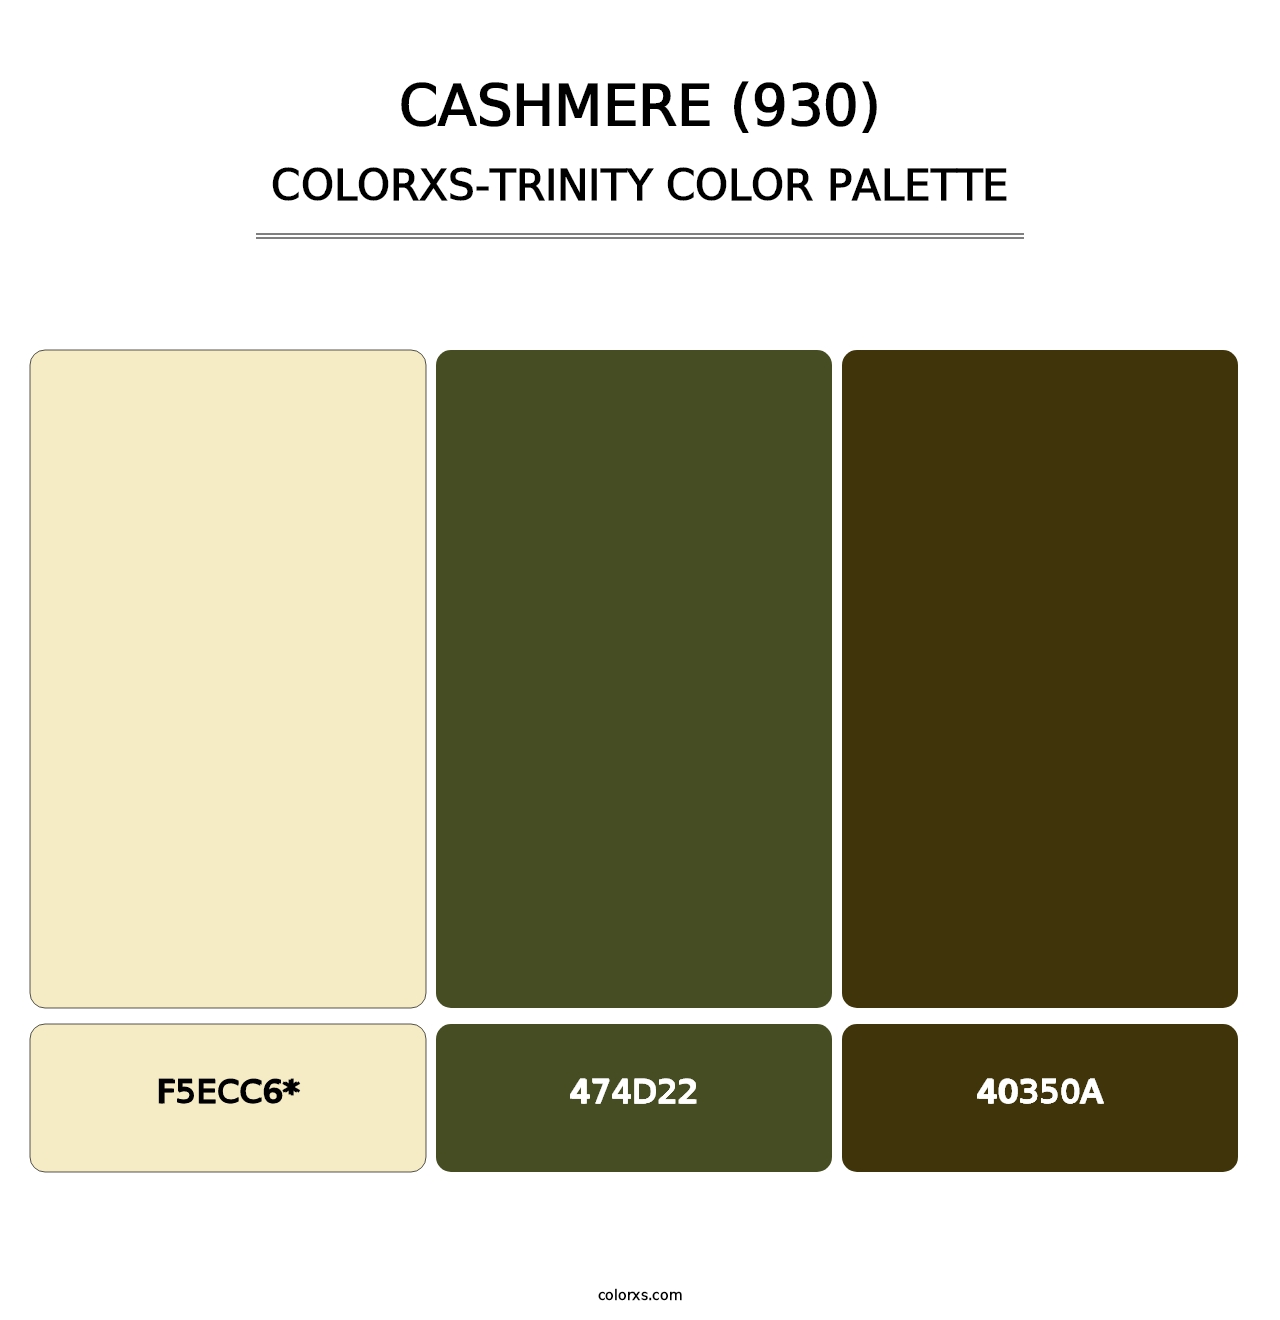 Cashmere (930) - Colorxs Trinity Palette